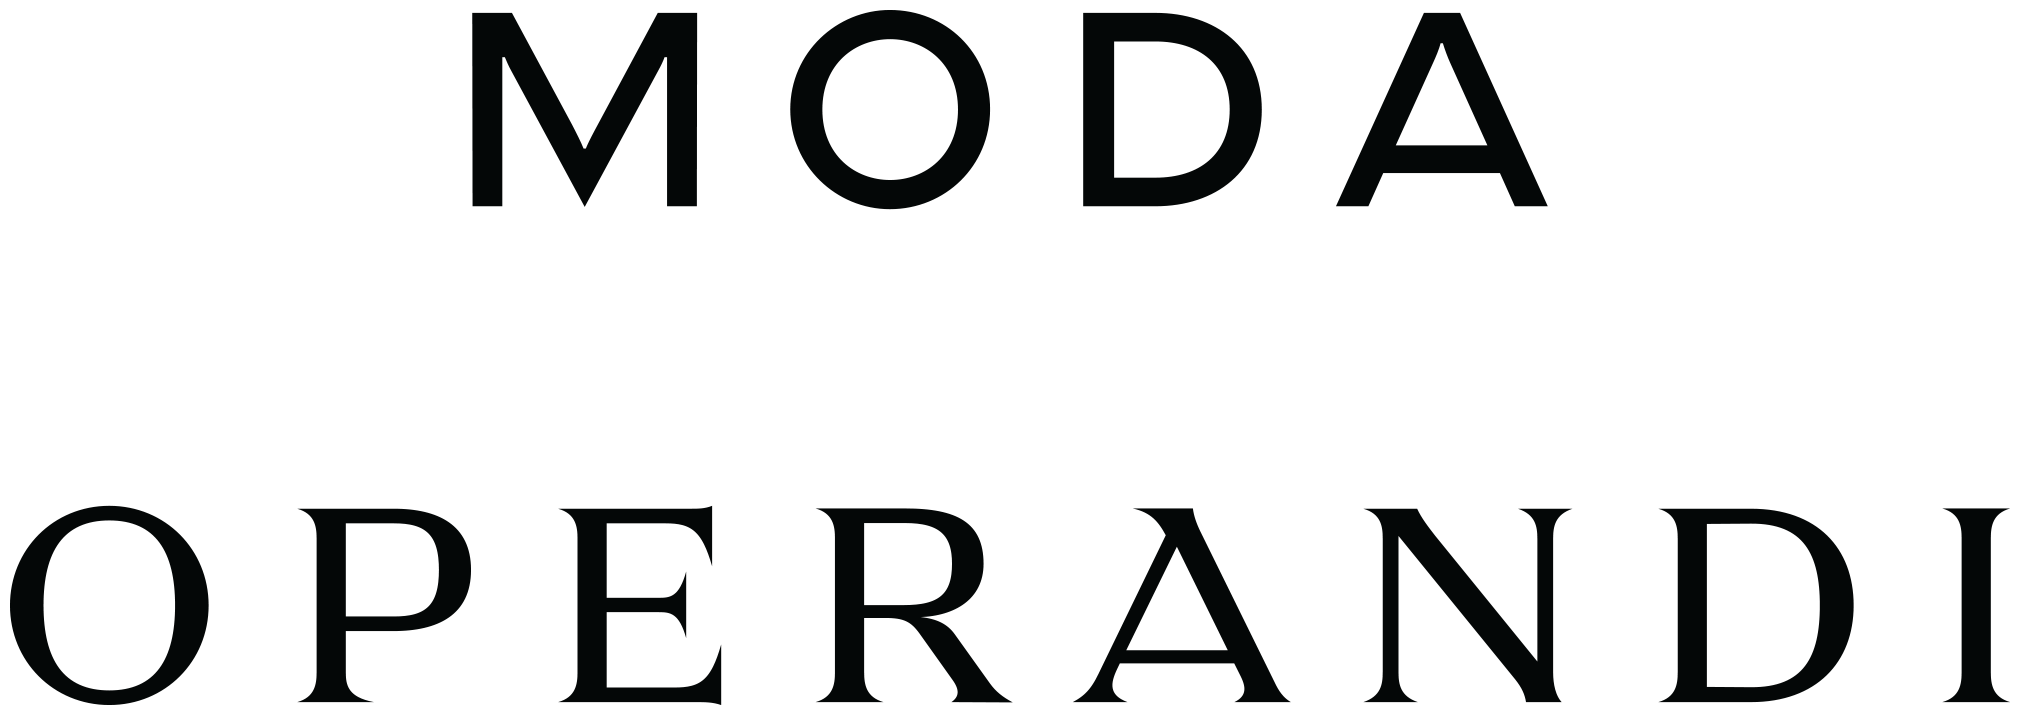 New Logo and Identity for Moda Operandi by Lotta Nieminen